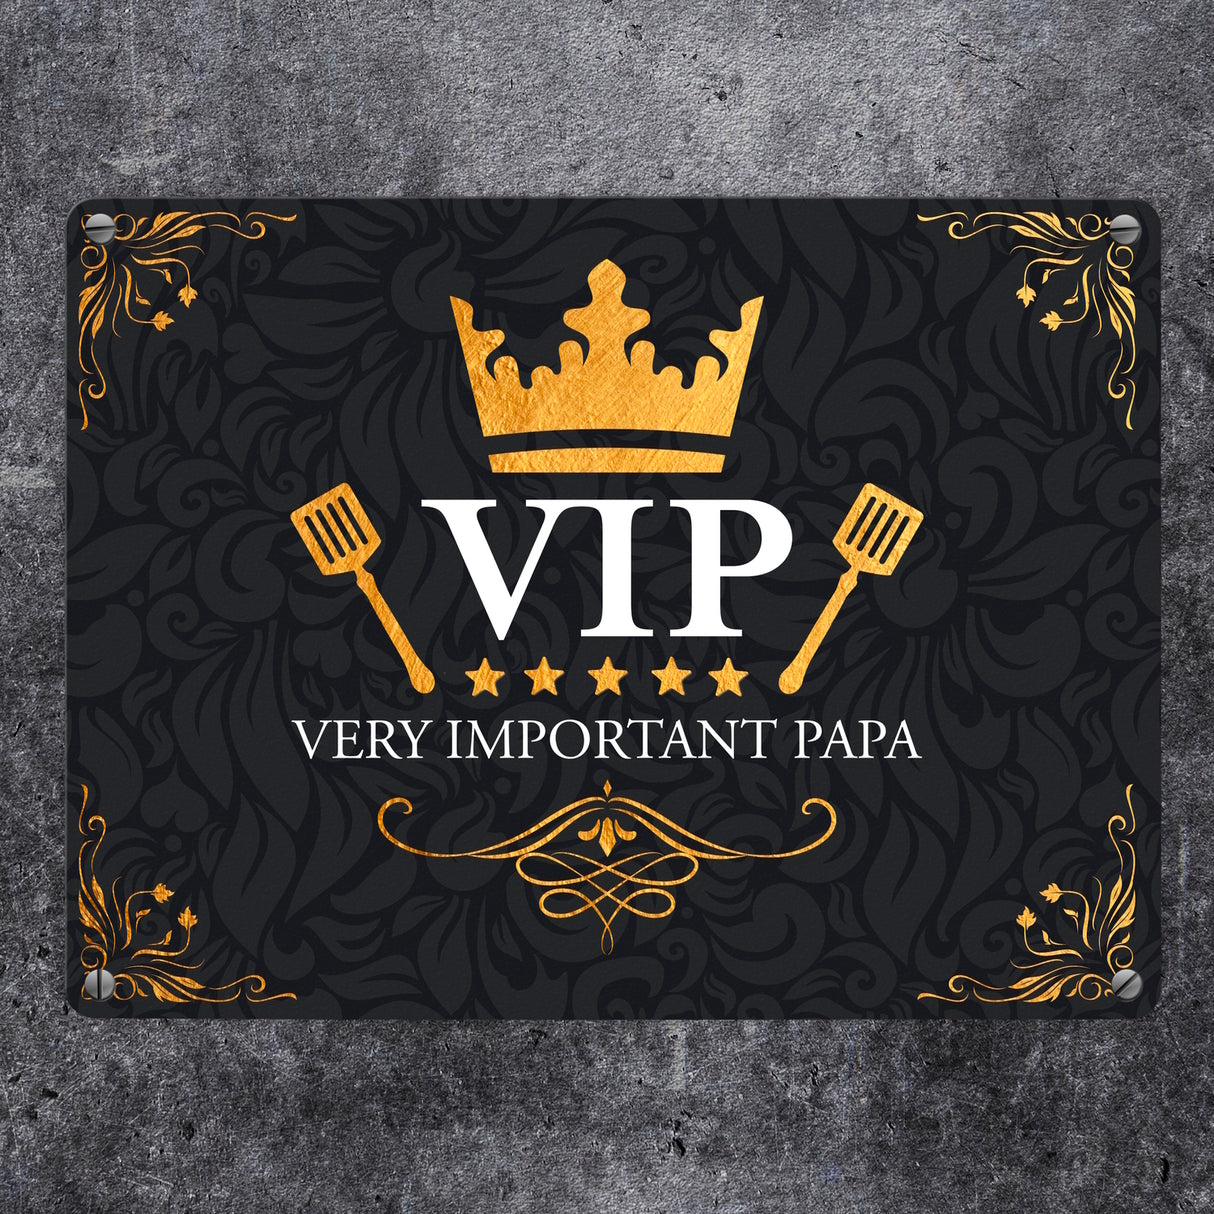 Very Important Papa Metallschild mit VIP Motiv